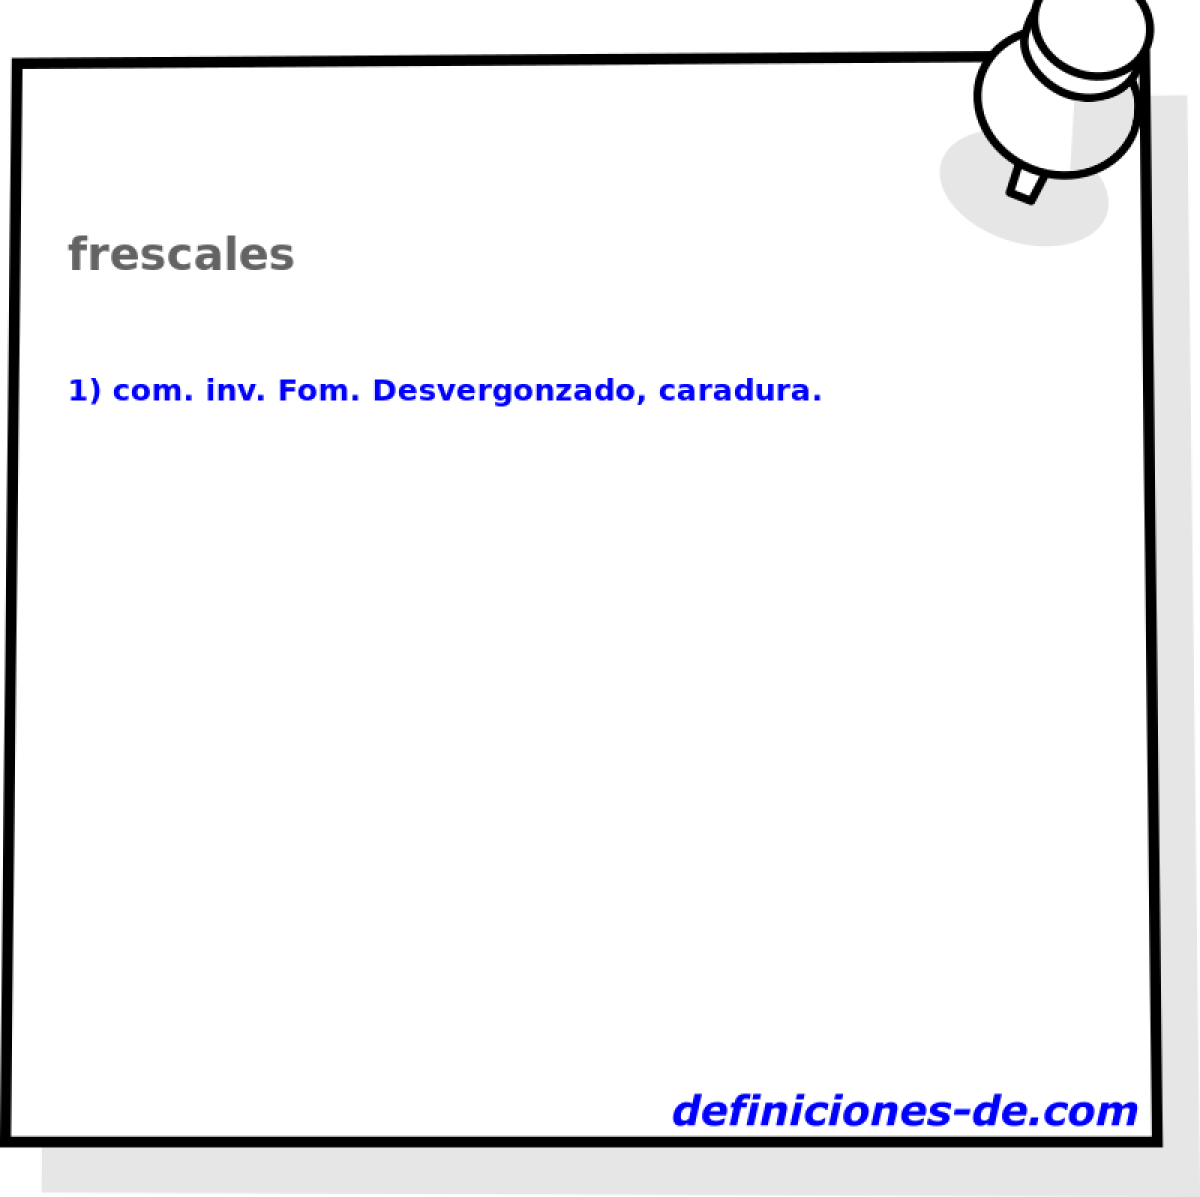 frescales 